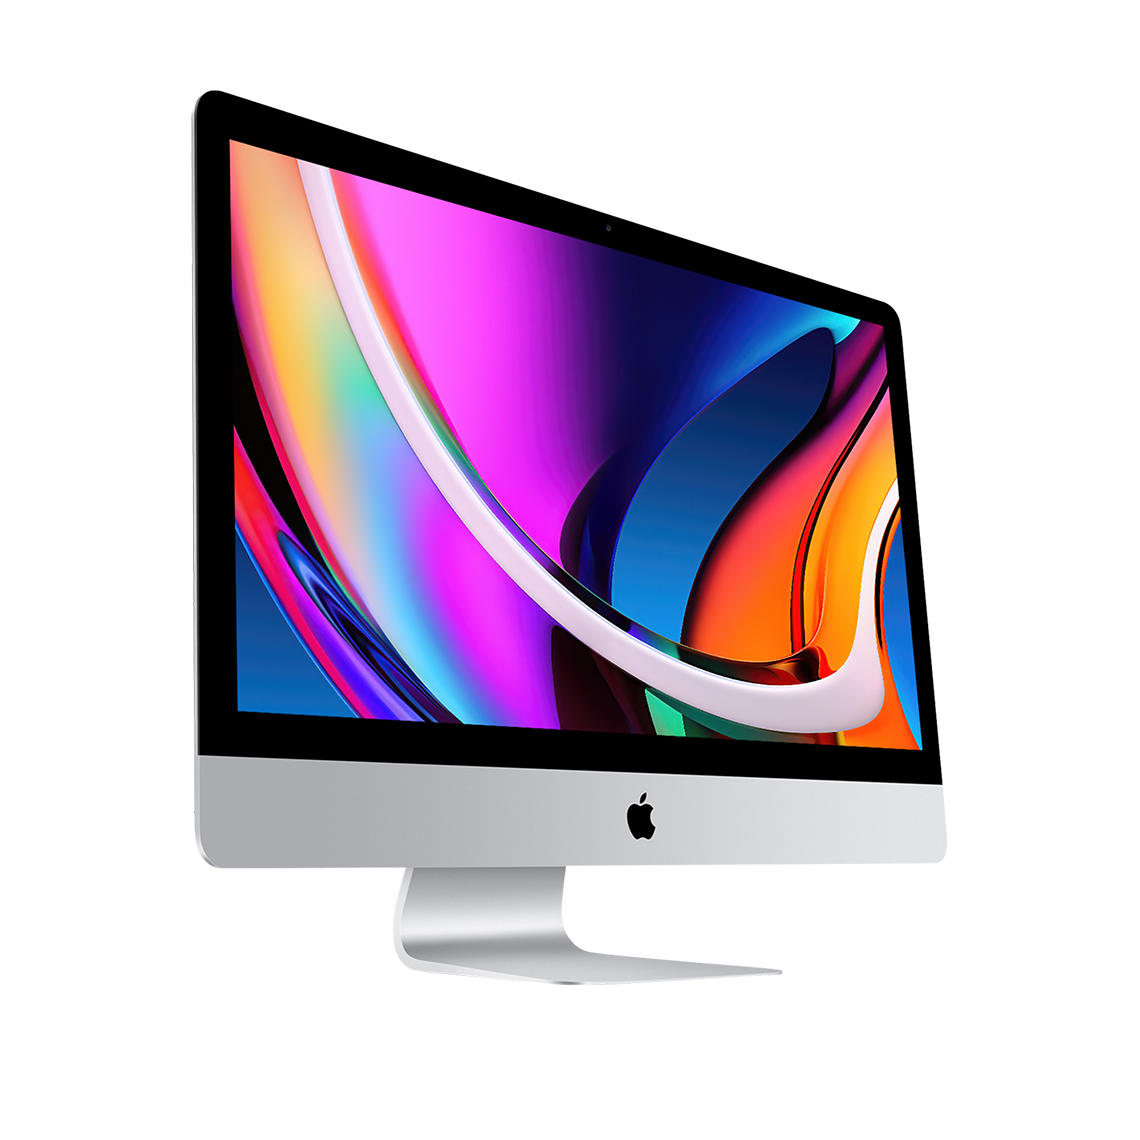 2020 iMac 27-inch 5K - Intel Core i5, 16GB, 512GB Flash, Radeon Pro 5300 4GB, Open Box